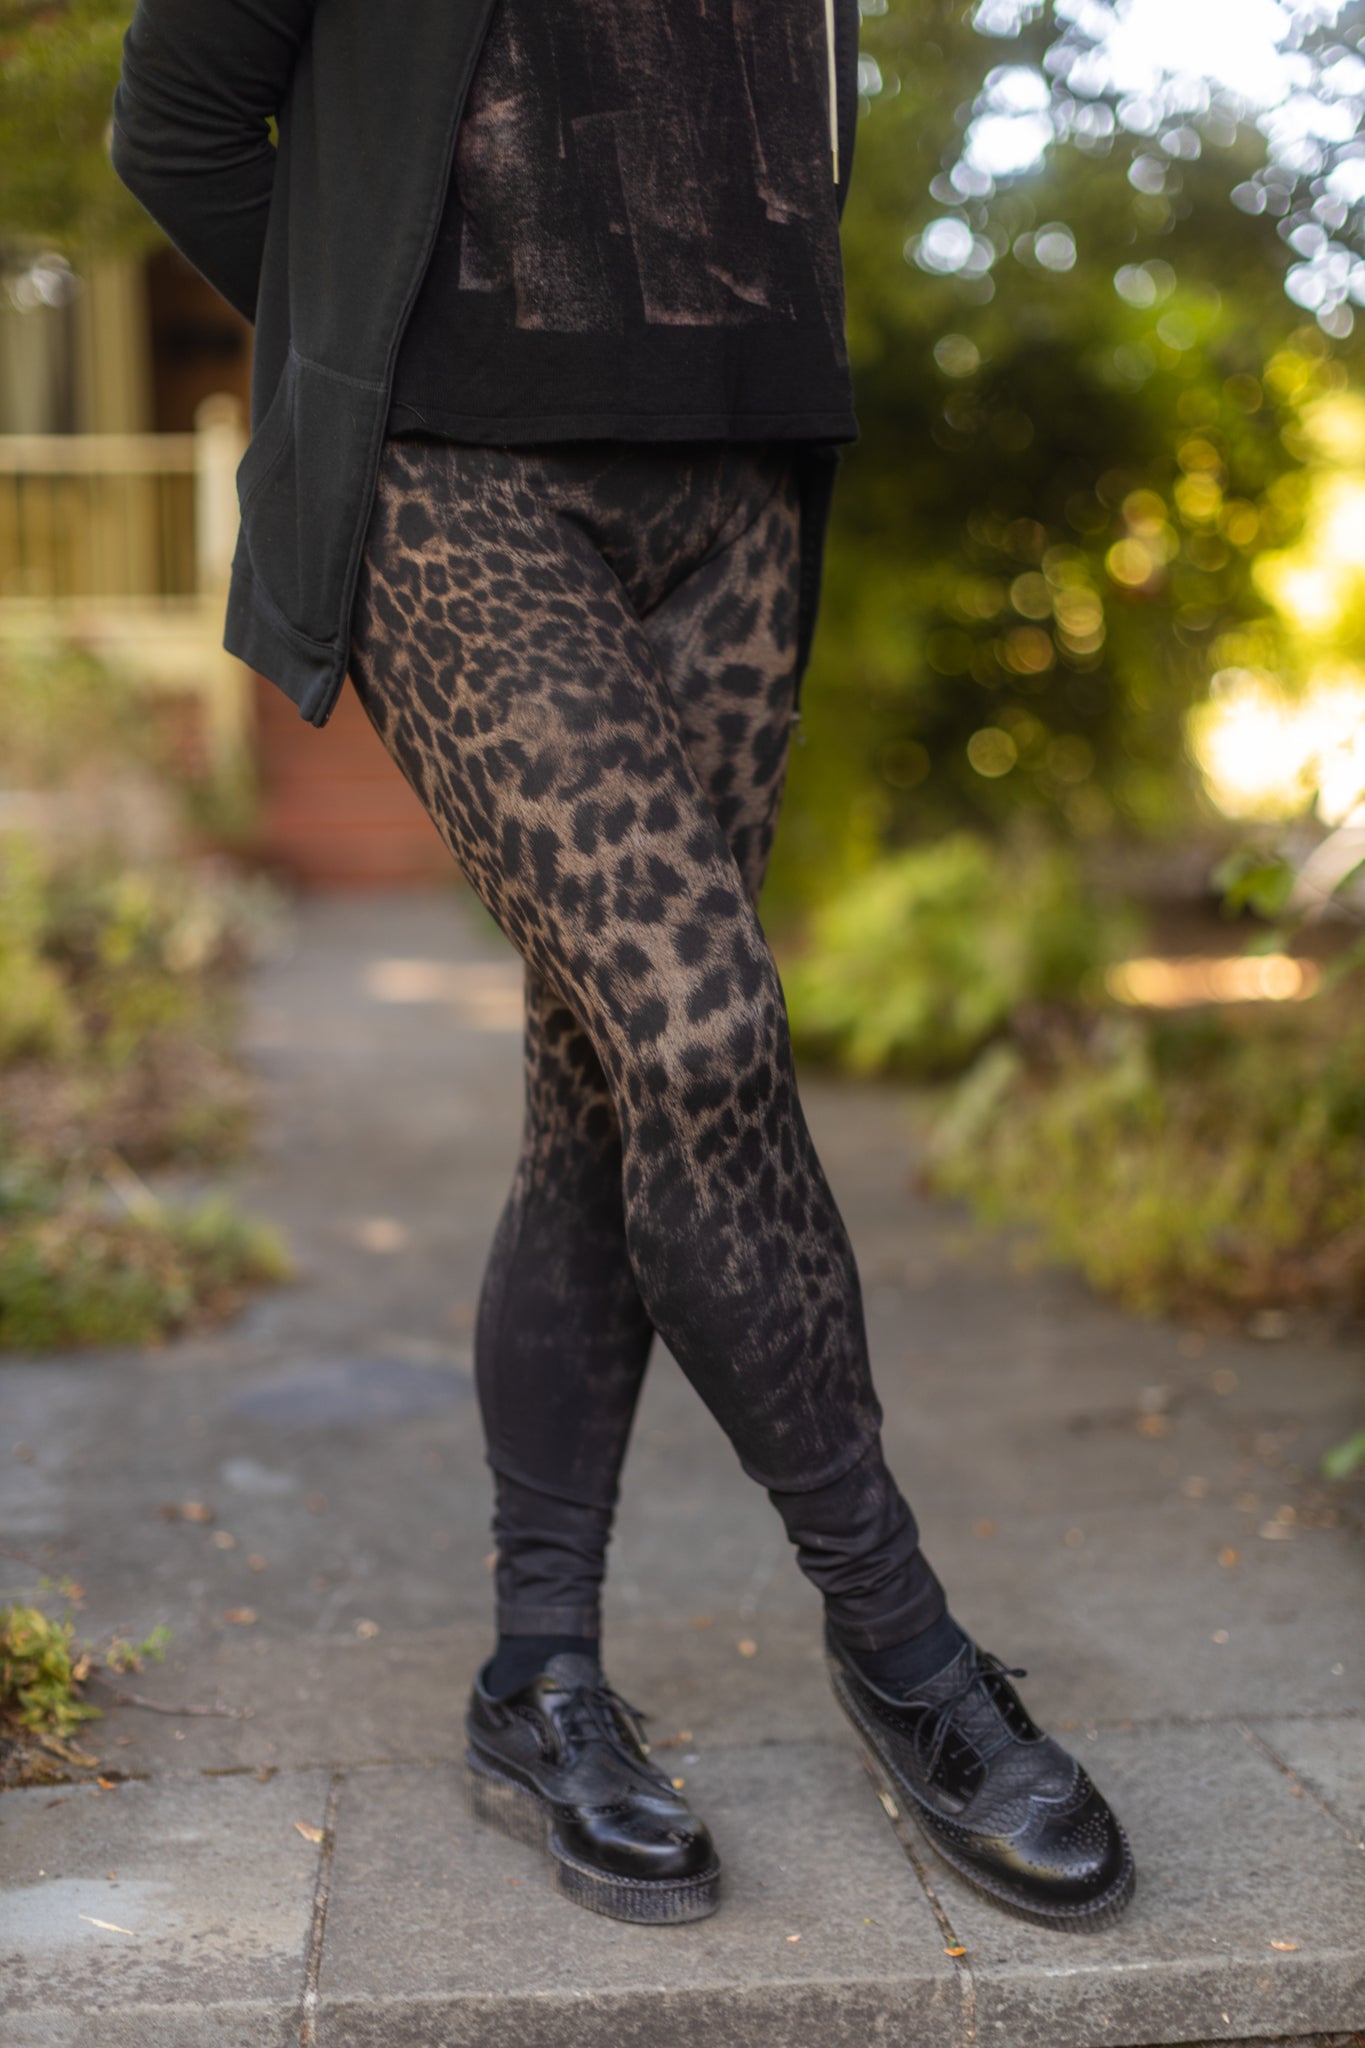 High Waisted Leopard Print Legging